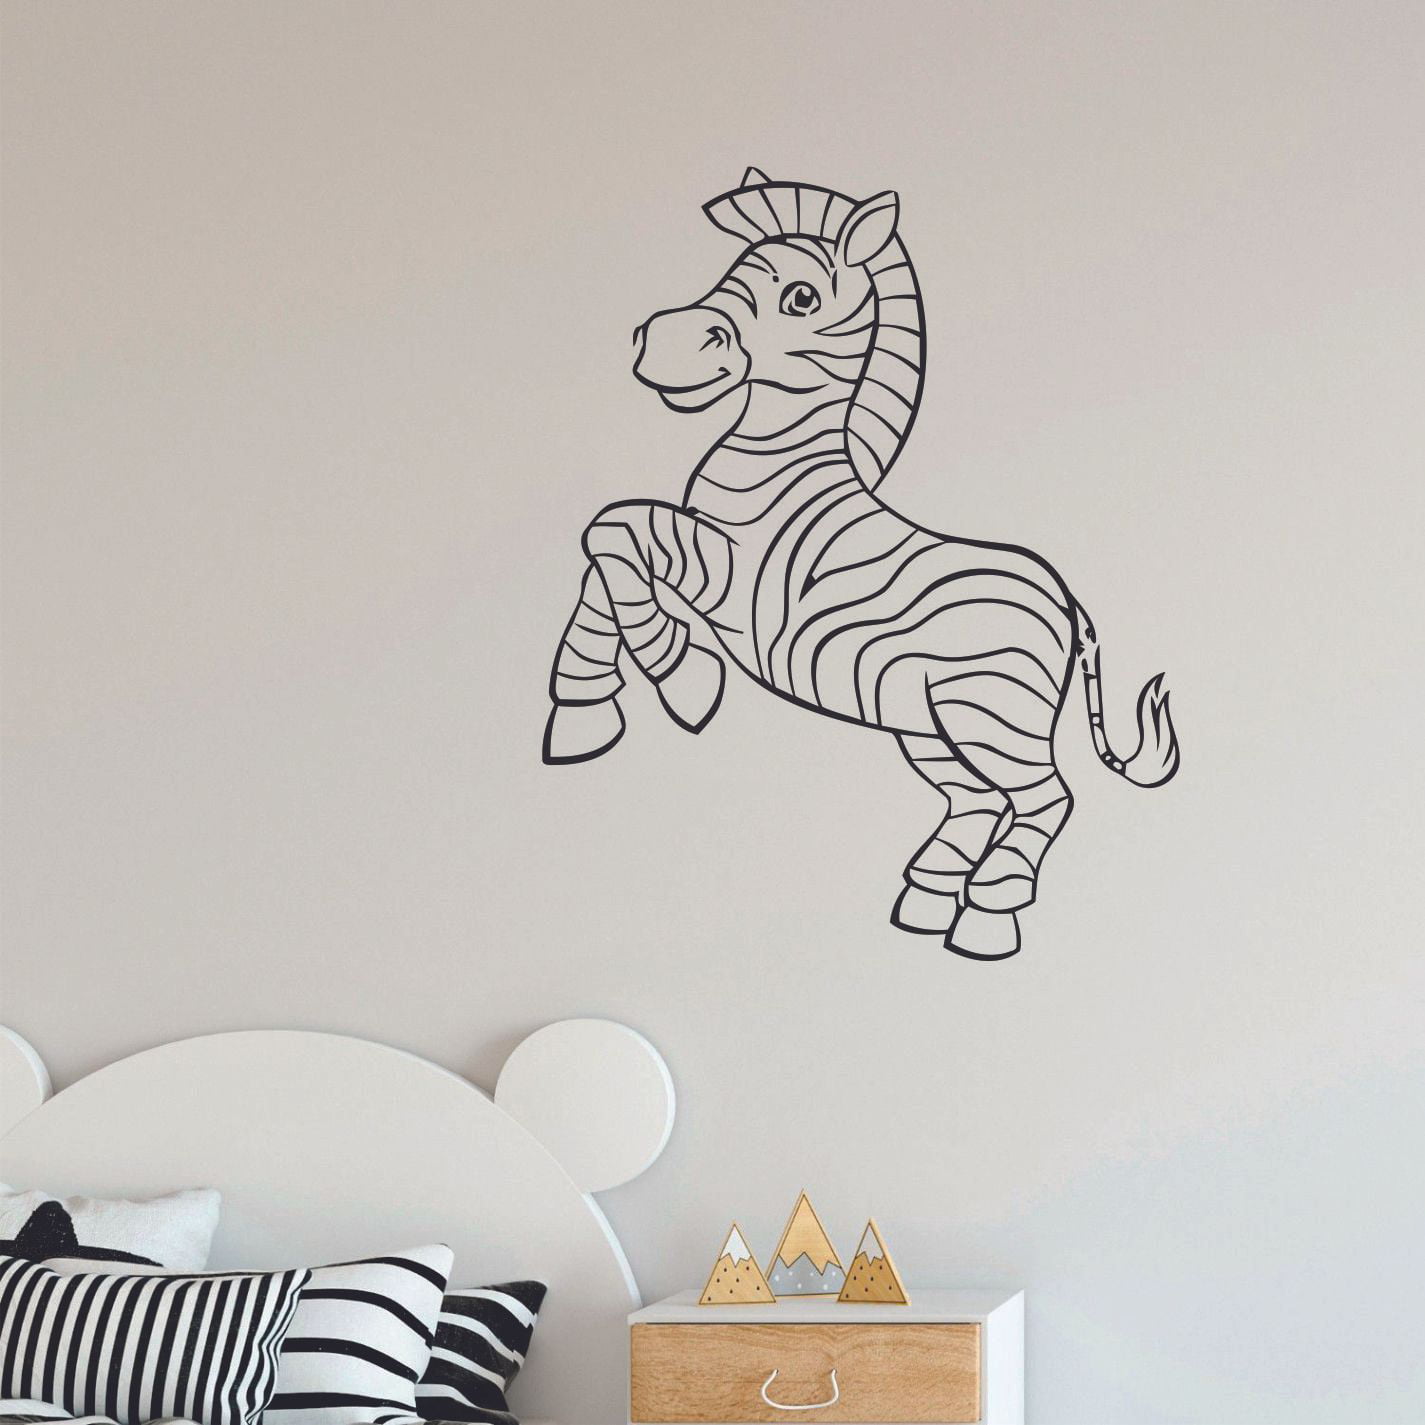 Home Decoration Wall Sticker Self Adhesive Room Decor VInyl Decal Zebra Animal 